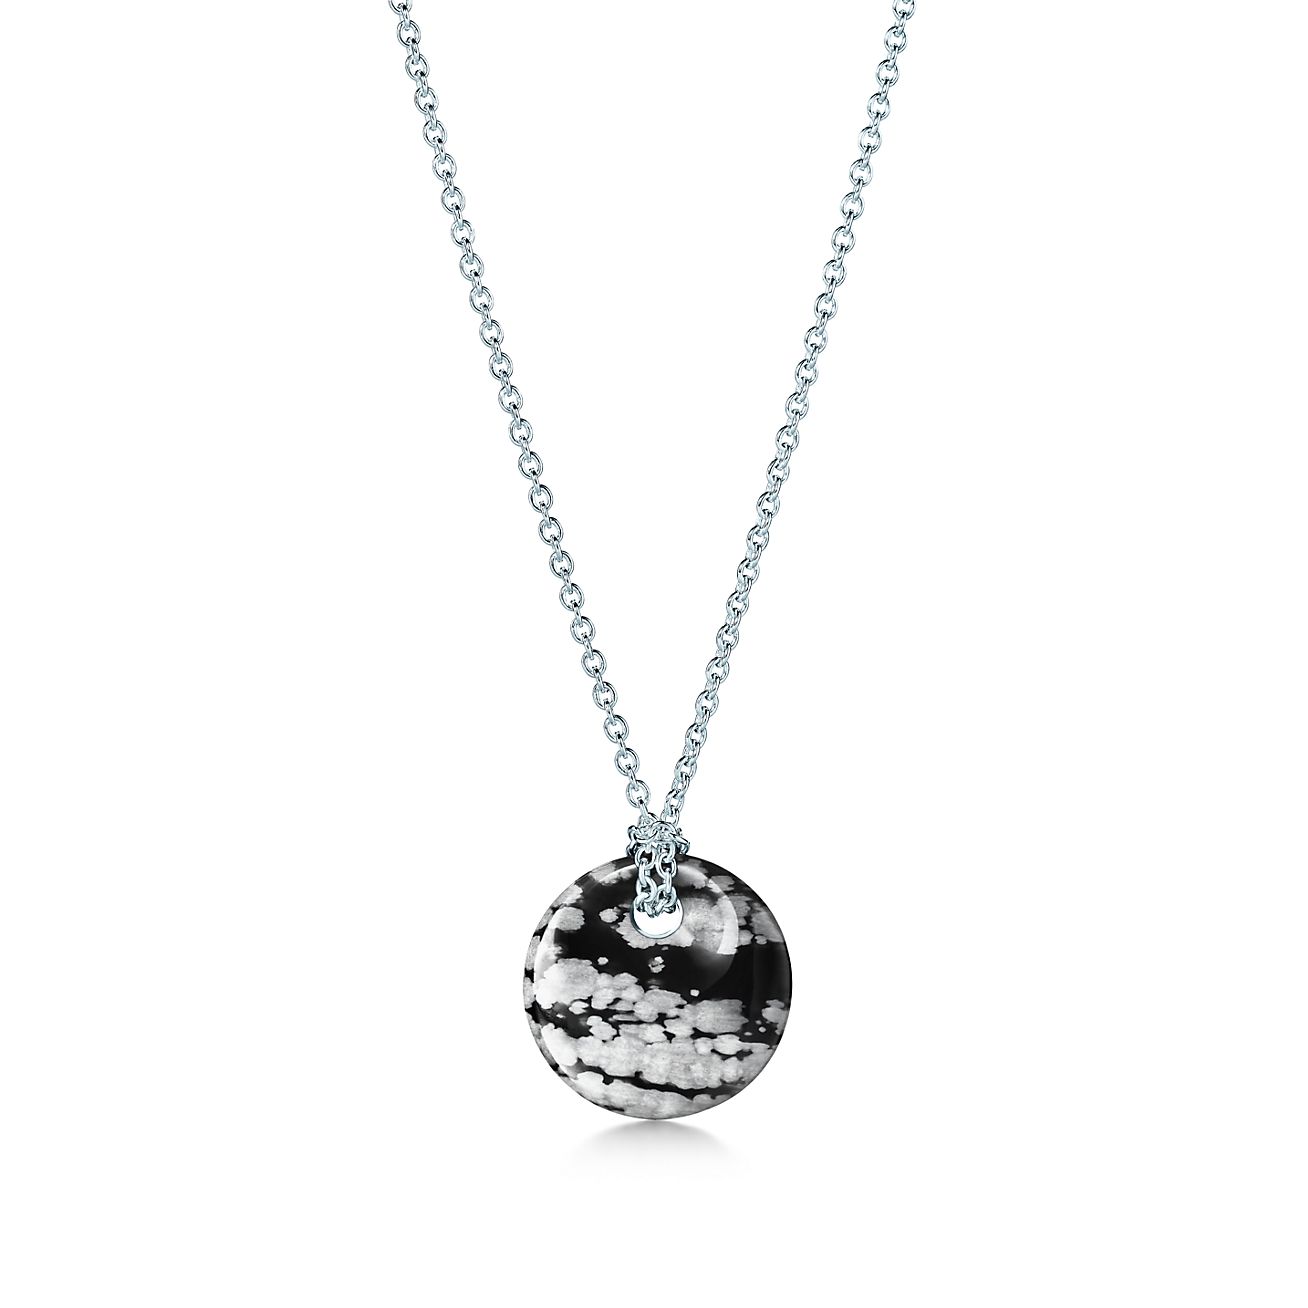 Snowflake obsidian in sterling silver pendant